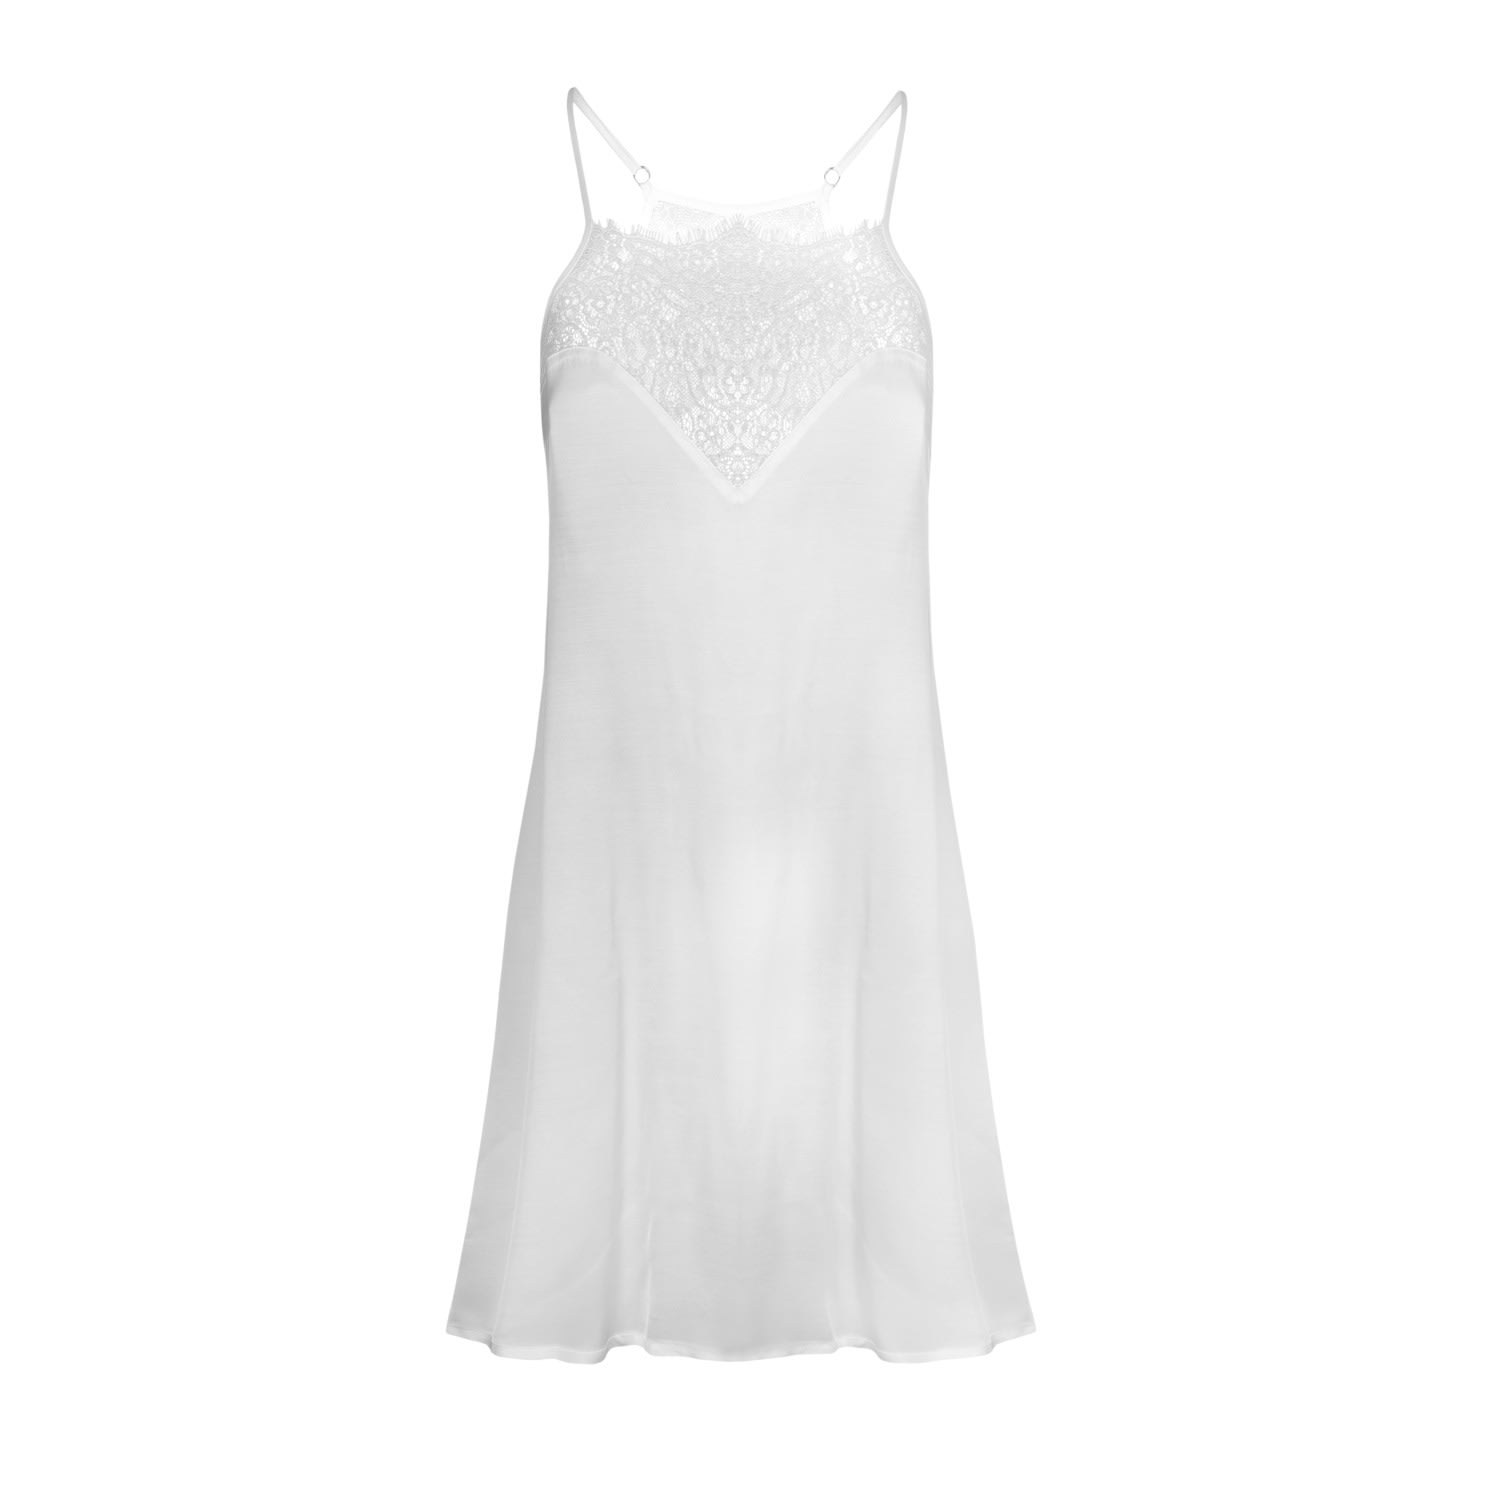 Women’s Chemise Nightdress - Viscose Satin & Delicate Lace - White Small Oh!Zuza Night & Day